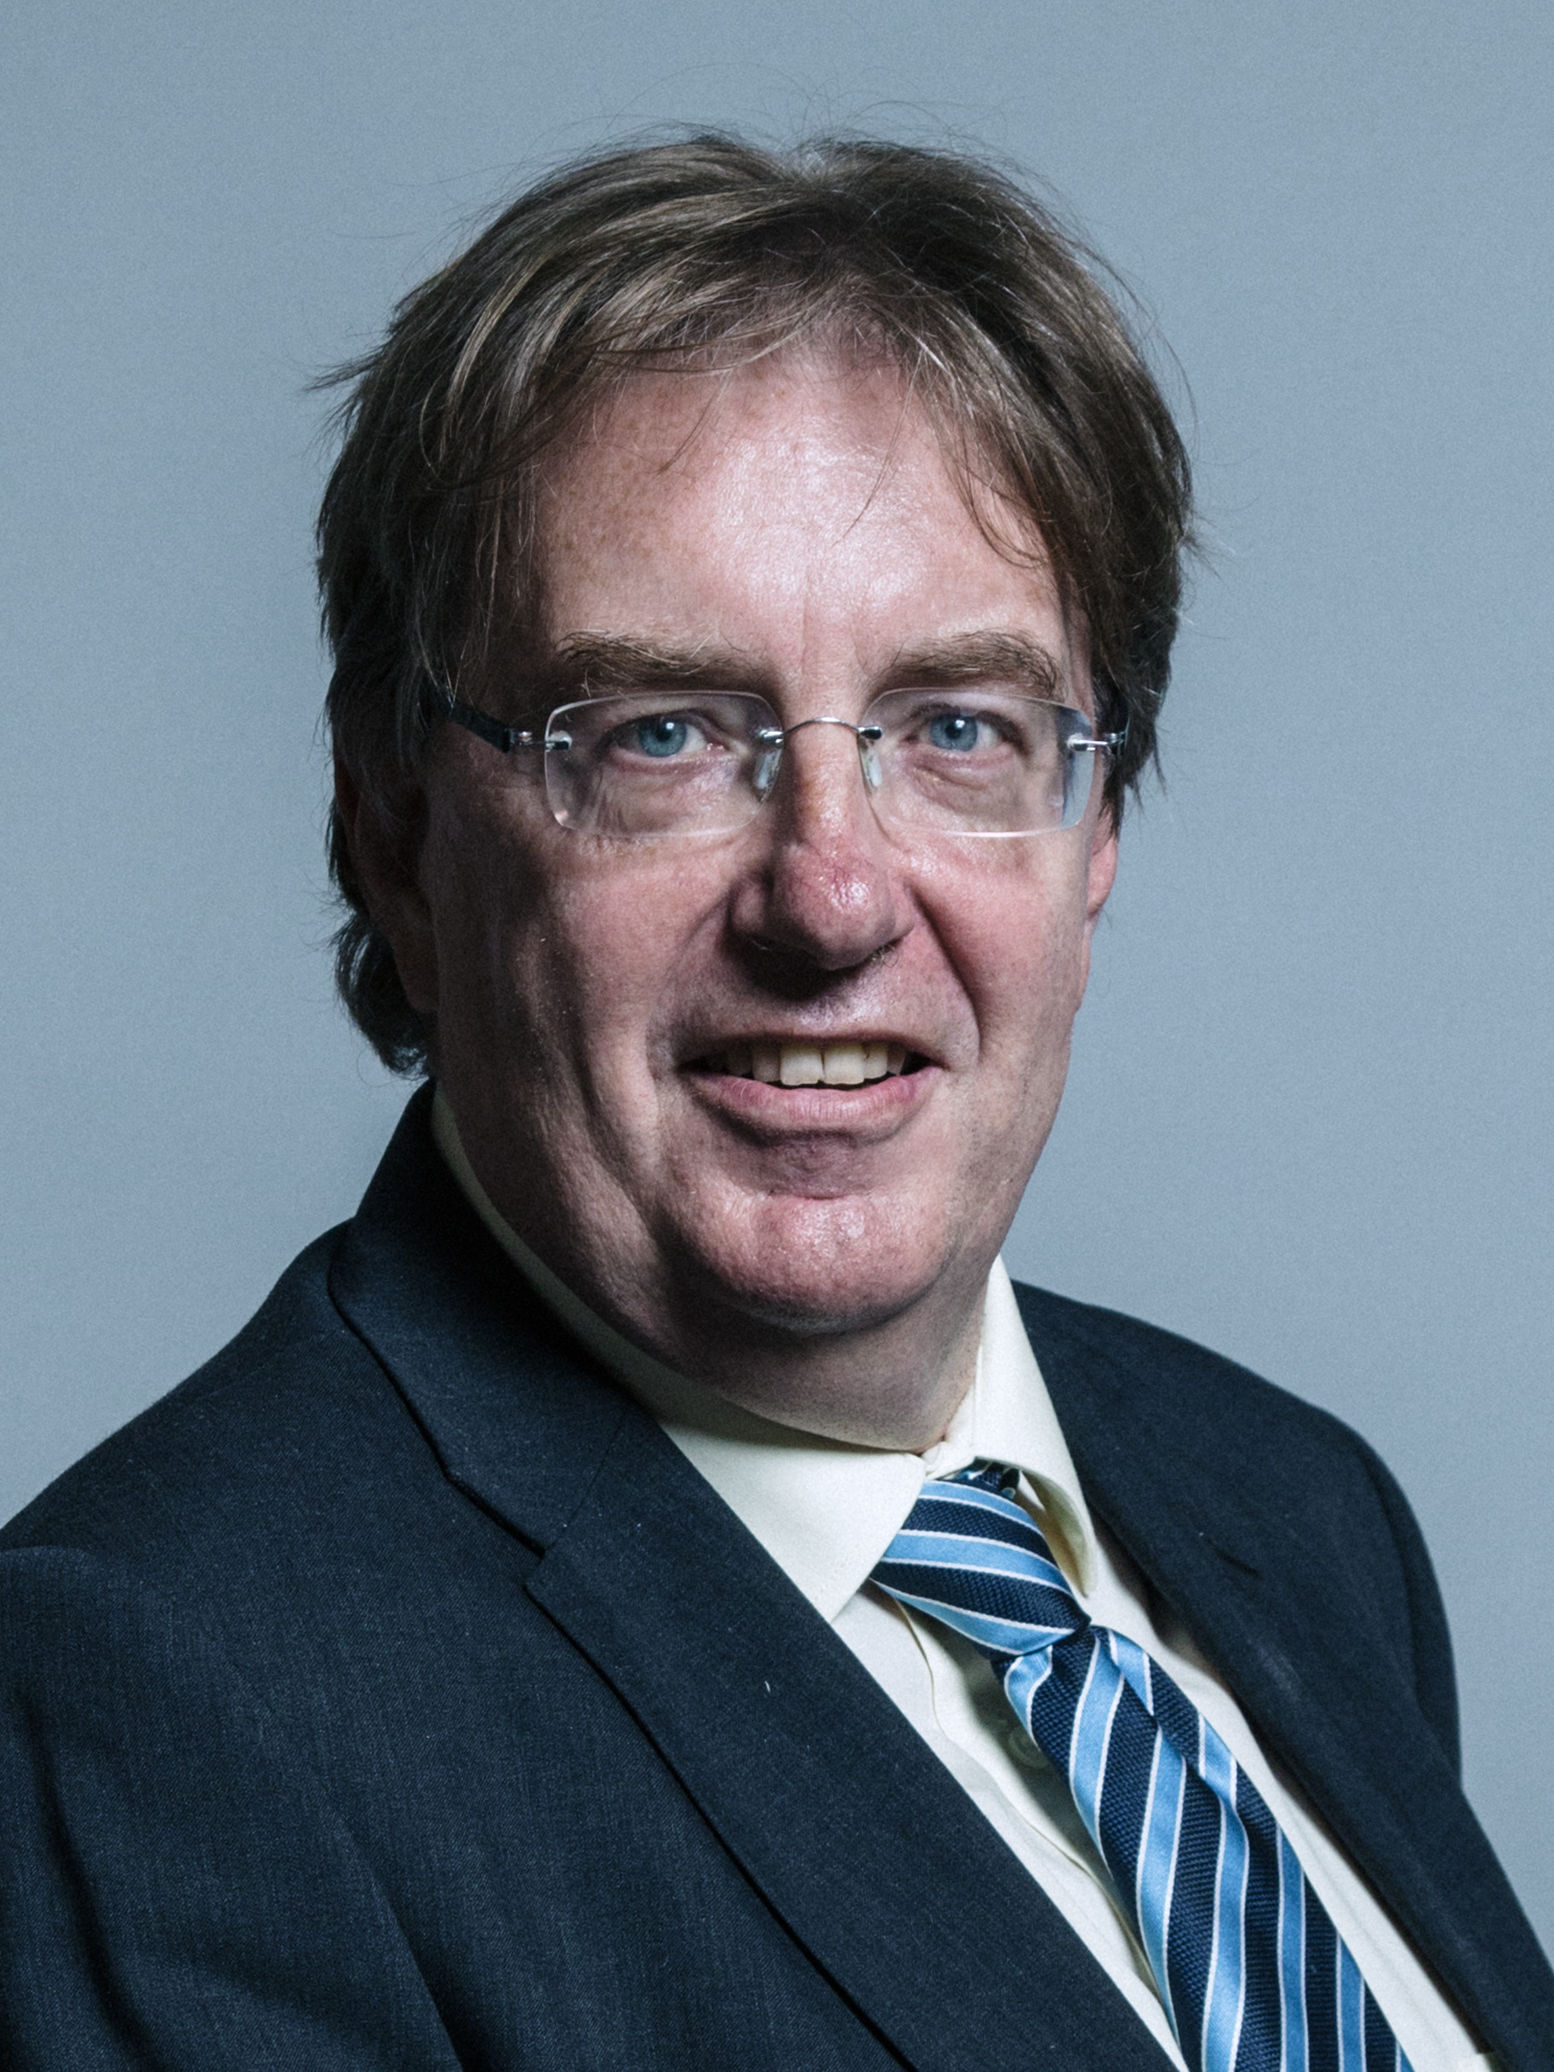 John Howell MP, Vice Chair